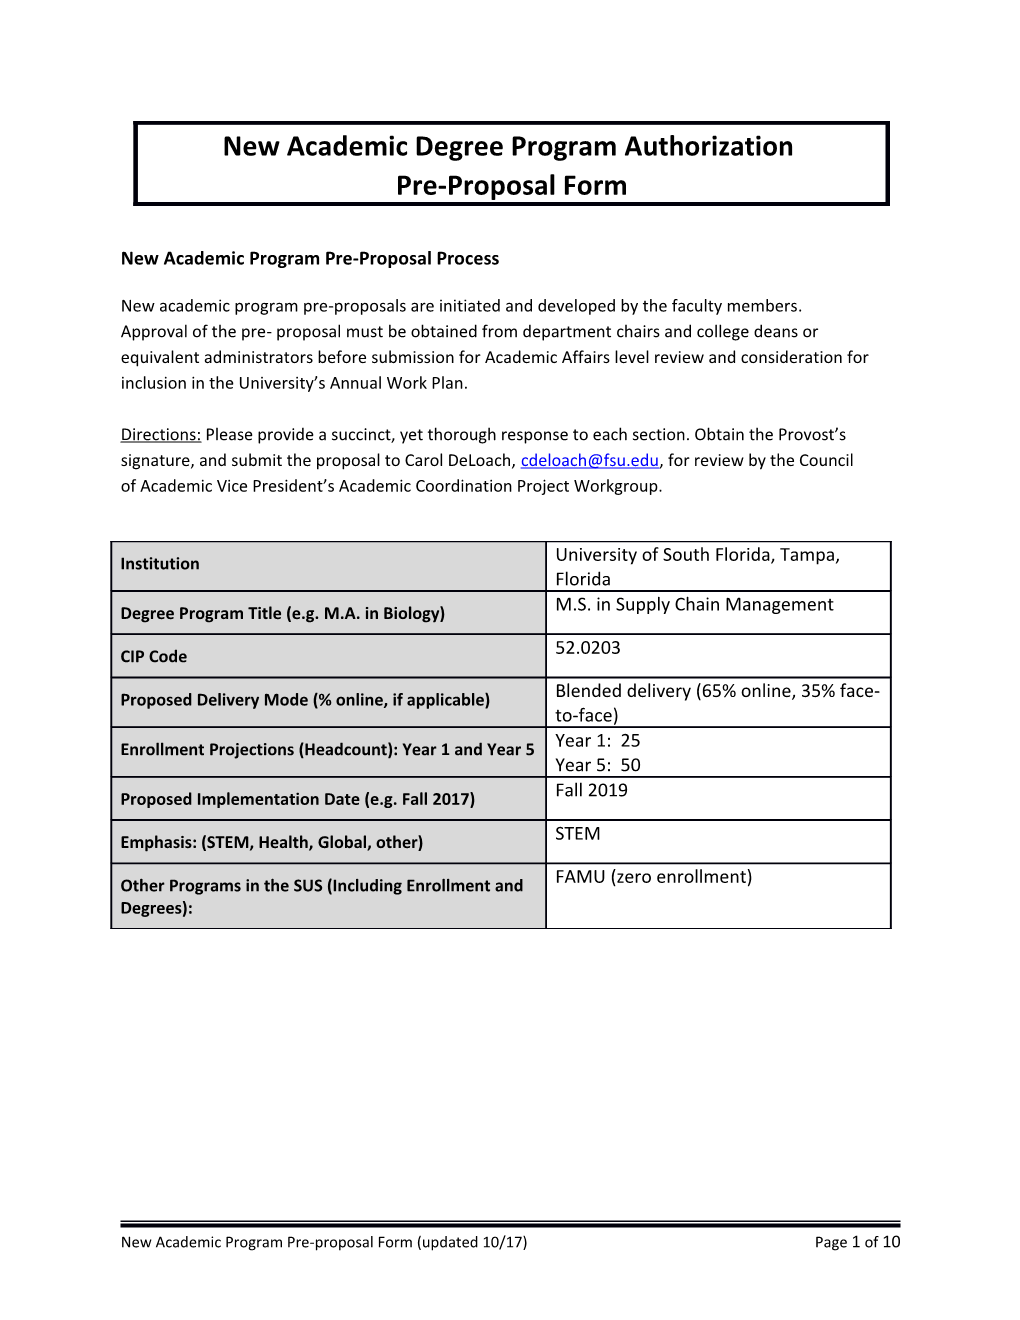 New Academicprogrampre-Proposalprocess